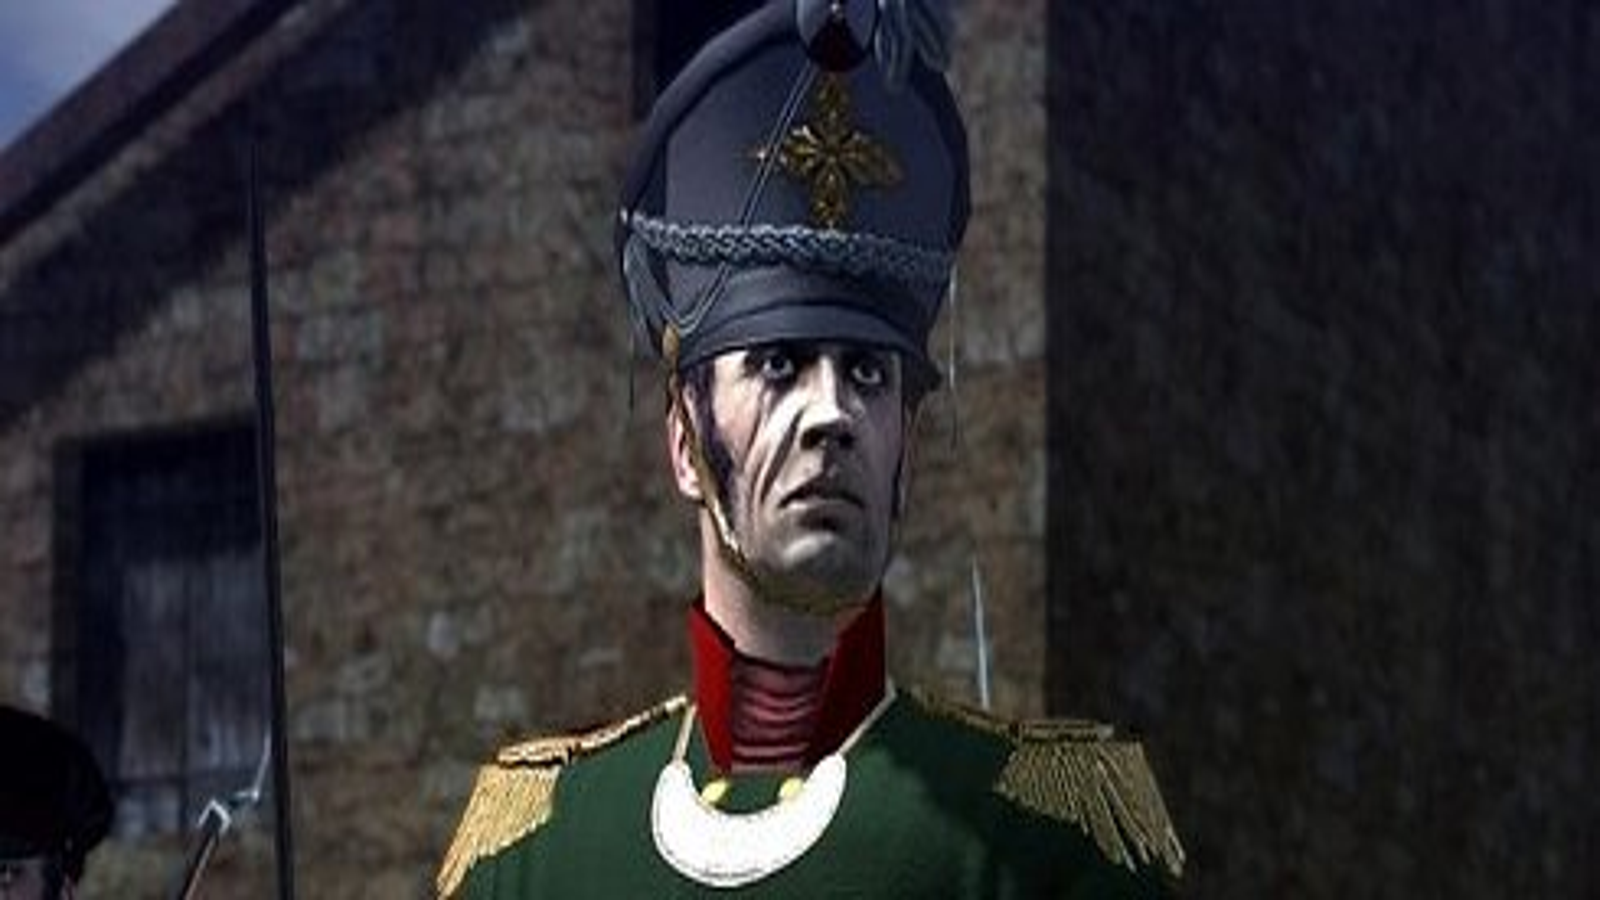 Napoleon: Total War, Total War Wiki